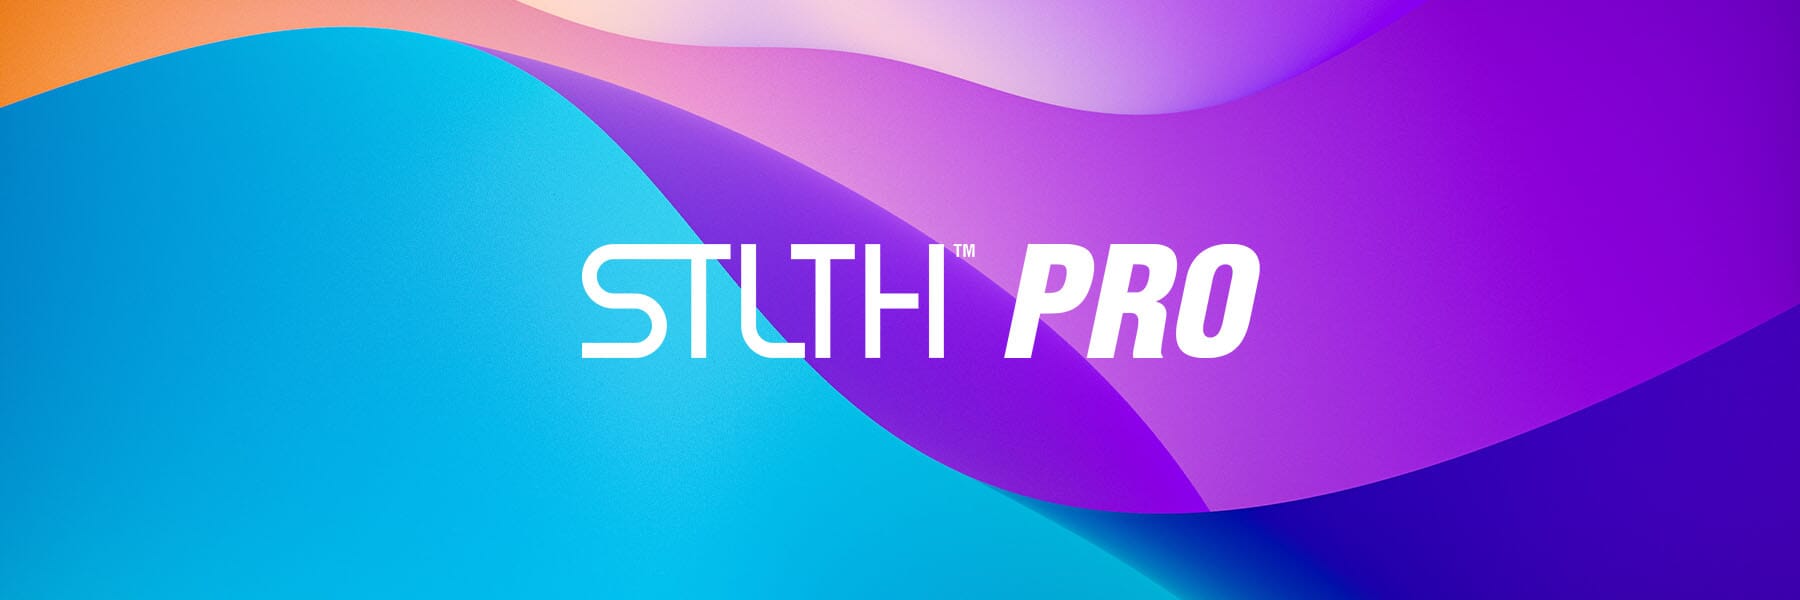 STLTH Pro Pods